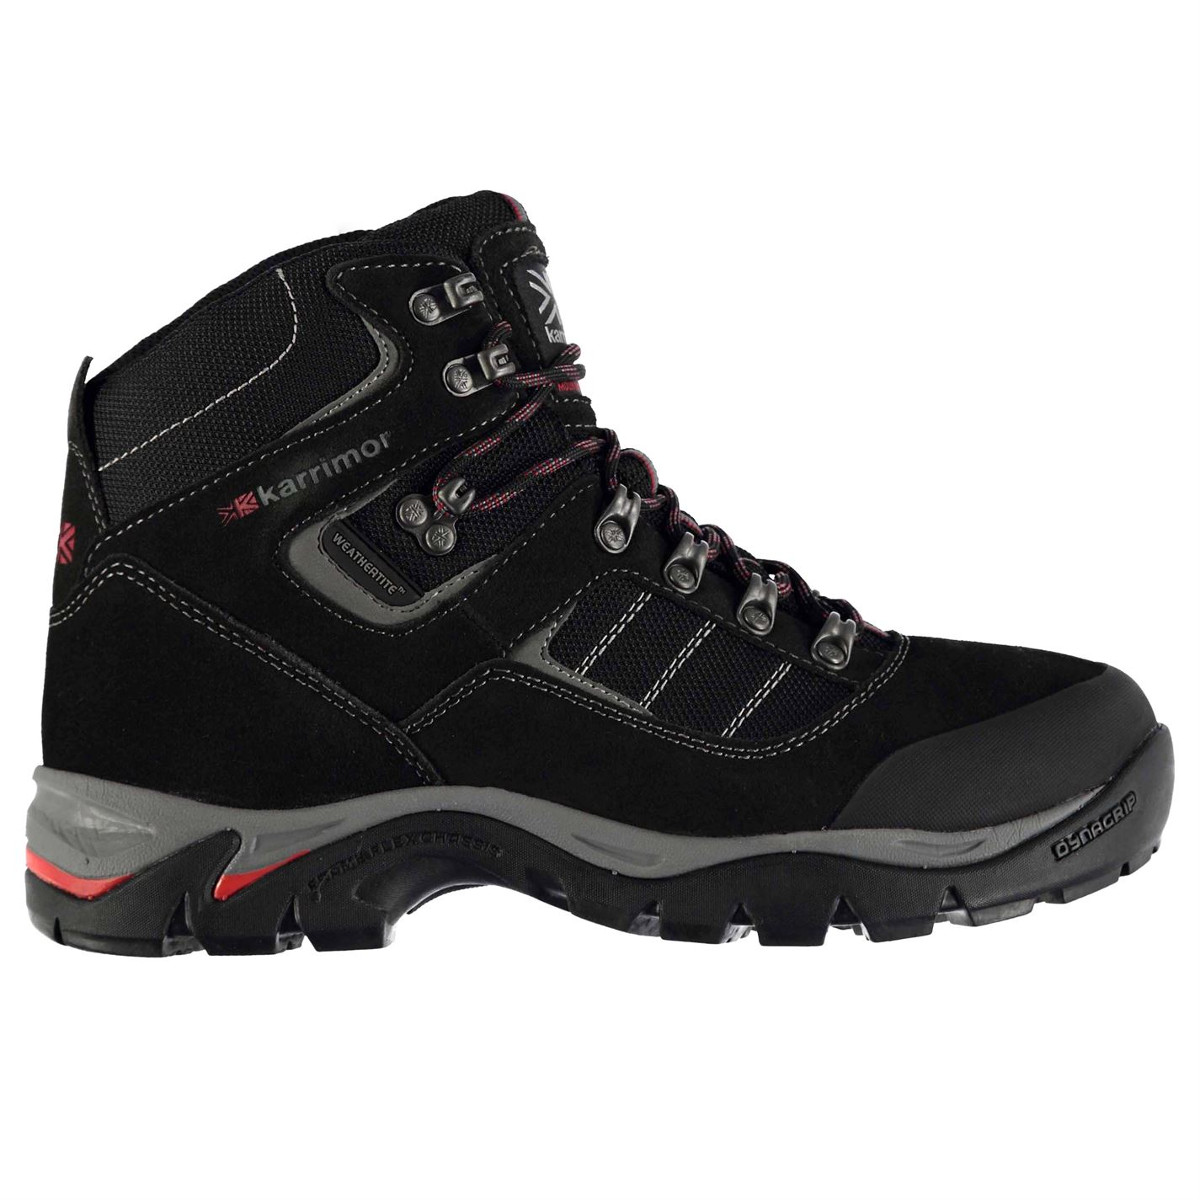 Karrimor Men's Ksb 200 Waterproof Mid Hiking Boots - Black, 13